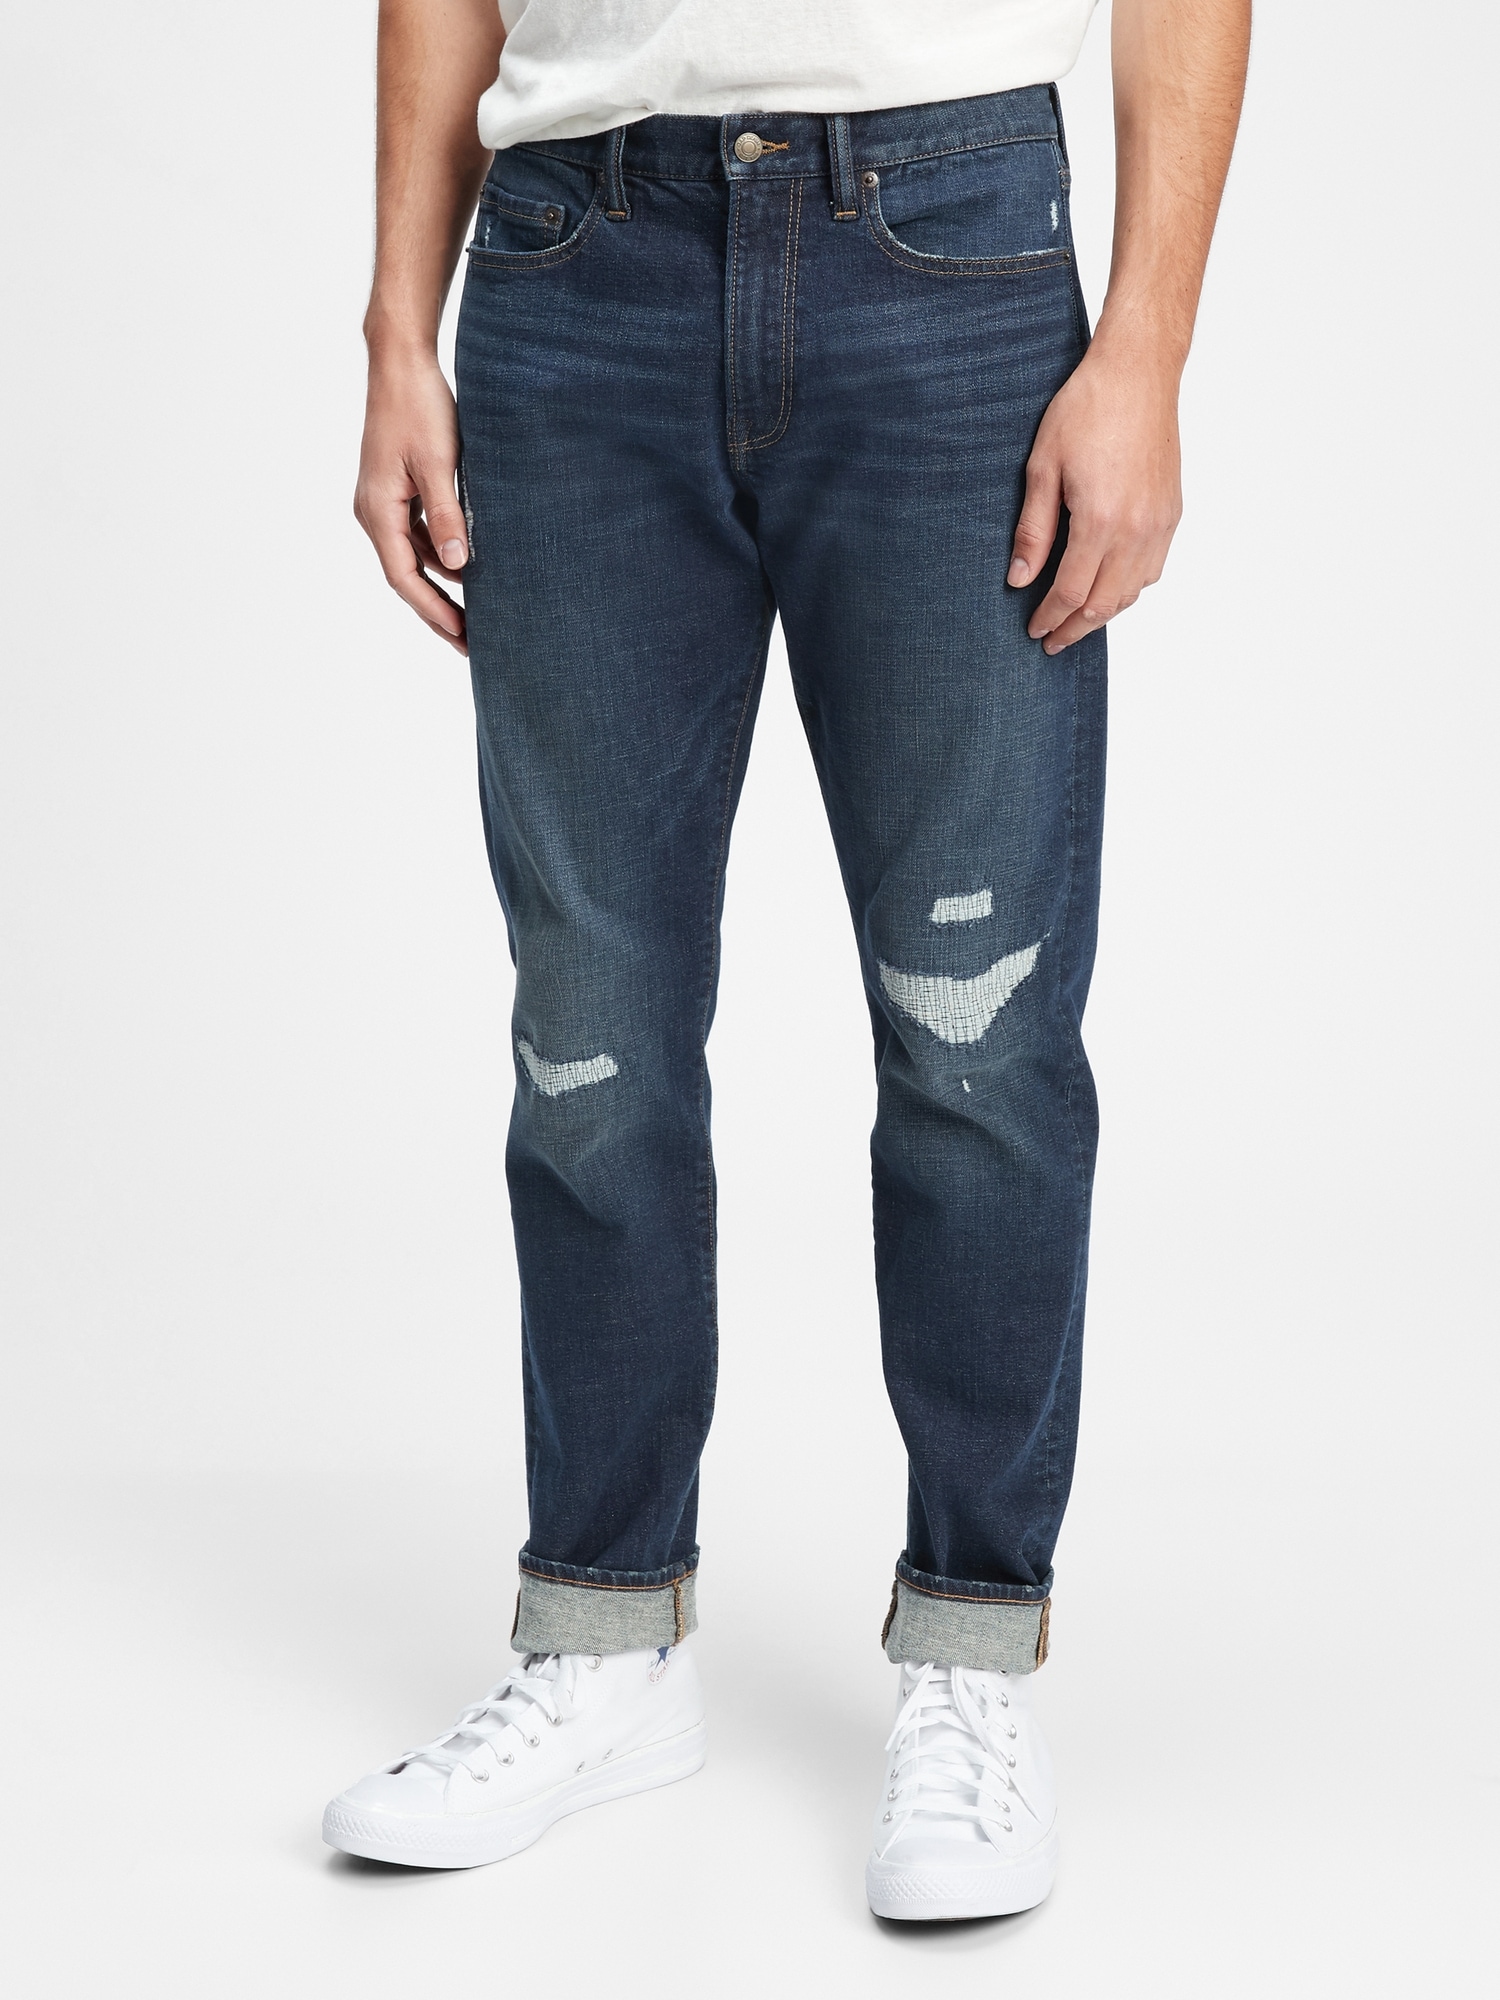 Select Men's Mid Rise Destructed GapFlex Skinny Jeans for $17.48